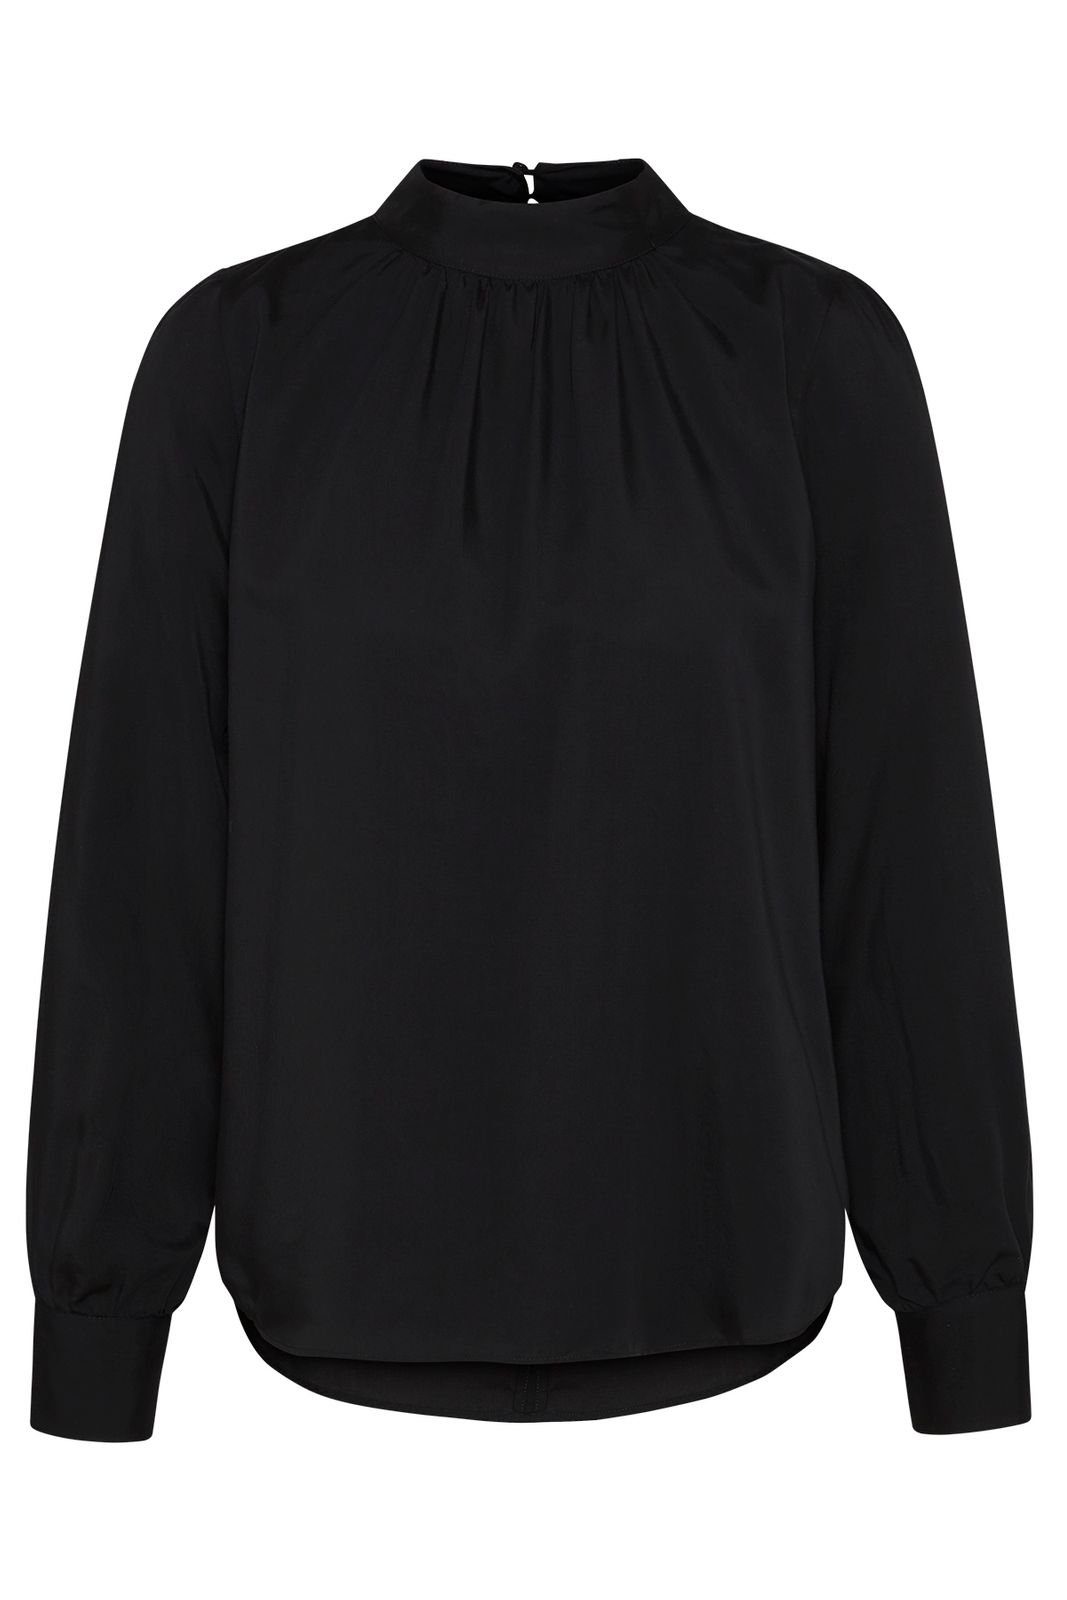 wunderwerk TENCEL Bluse - black 900 blouse turtleneck Klassische